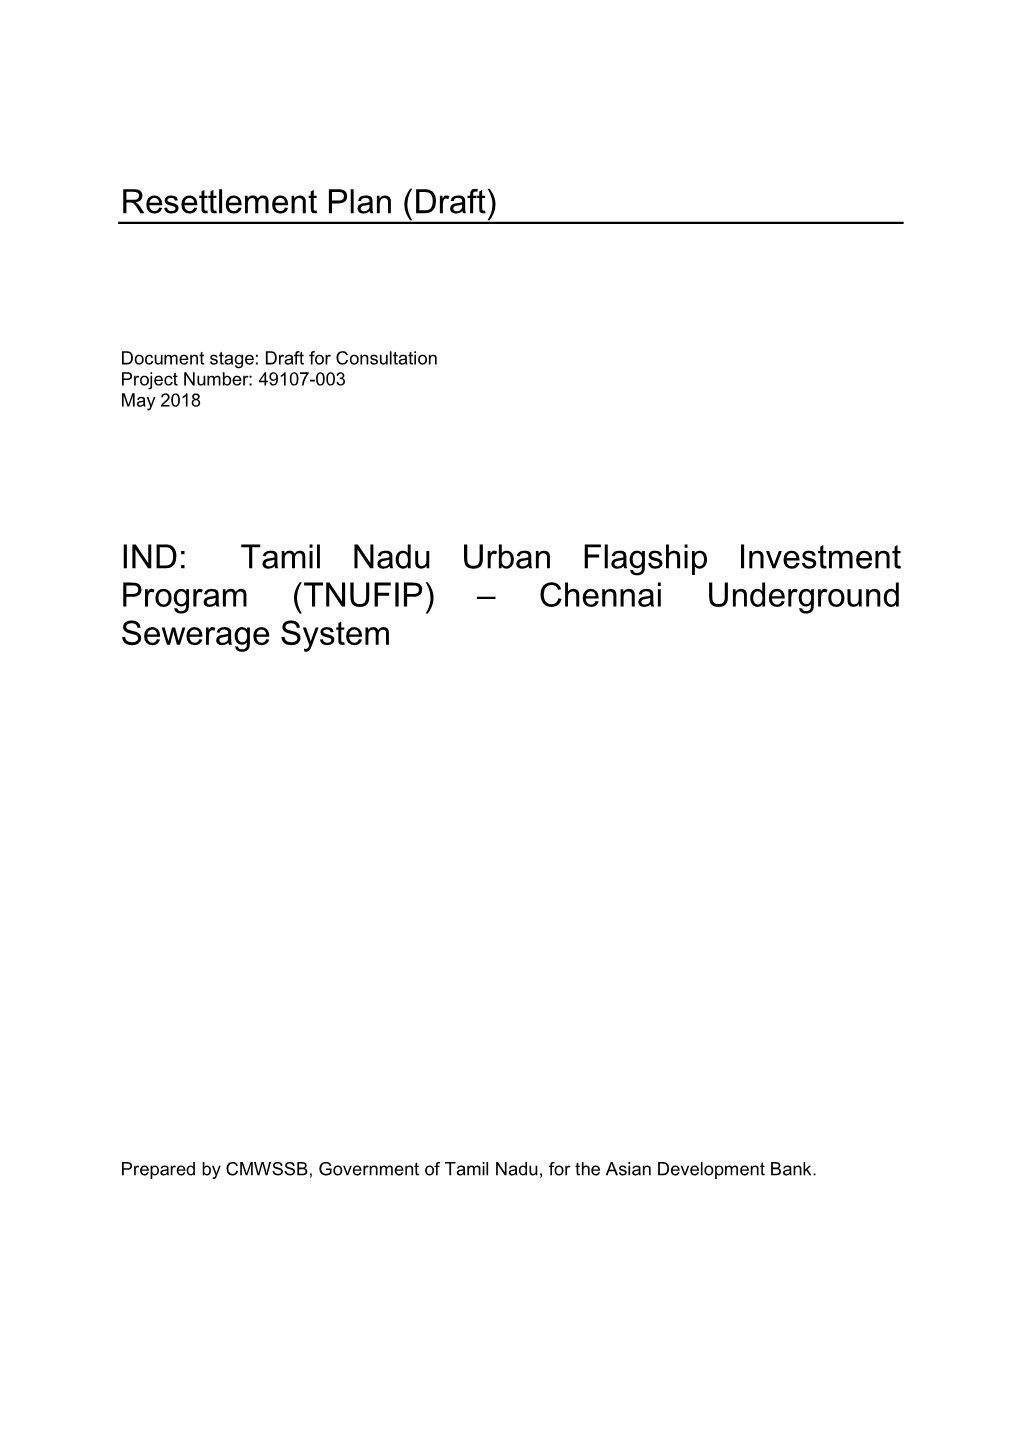 Resettlement Plan (Draft) IND: Tamil Nadu Urban Flagship Investment Program (TNUFIP) – Chennai Underground Sewerage System